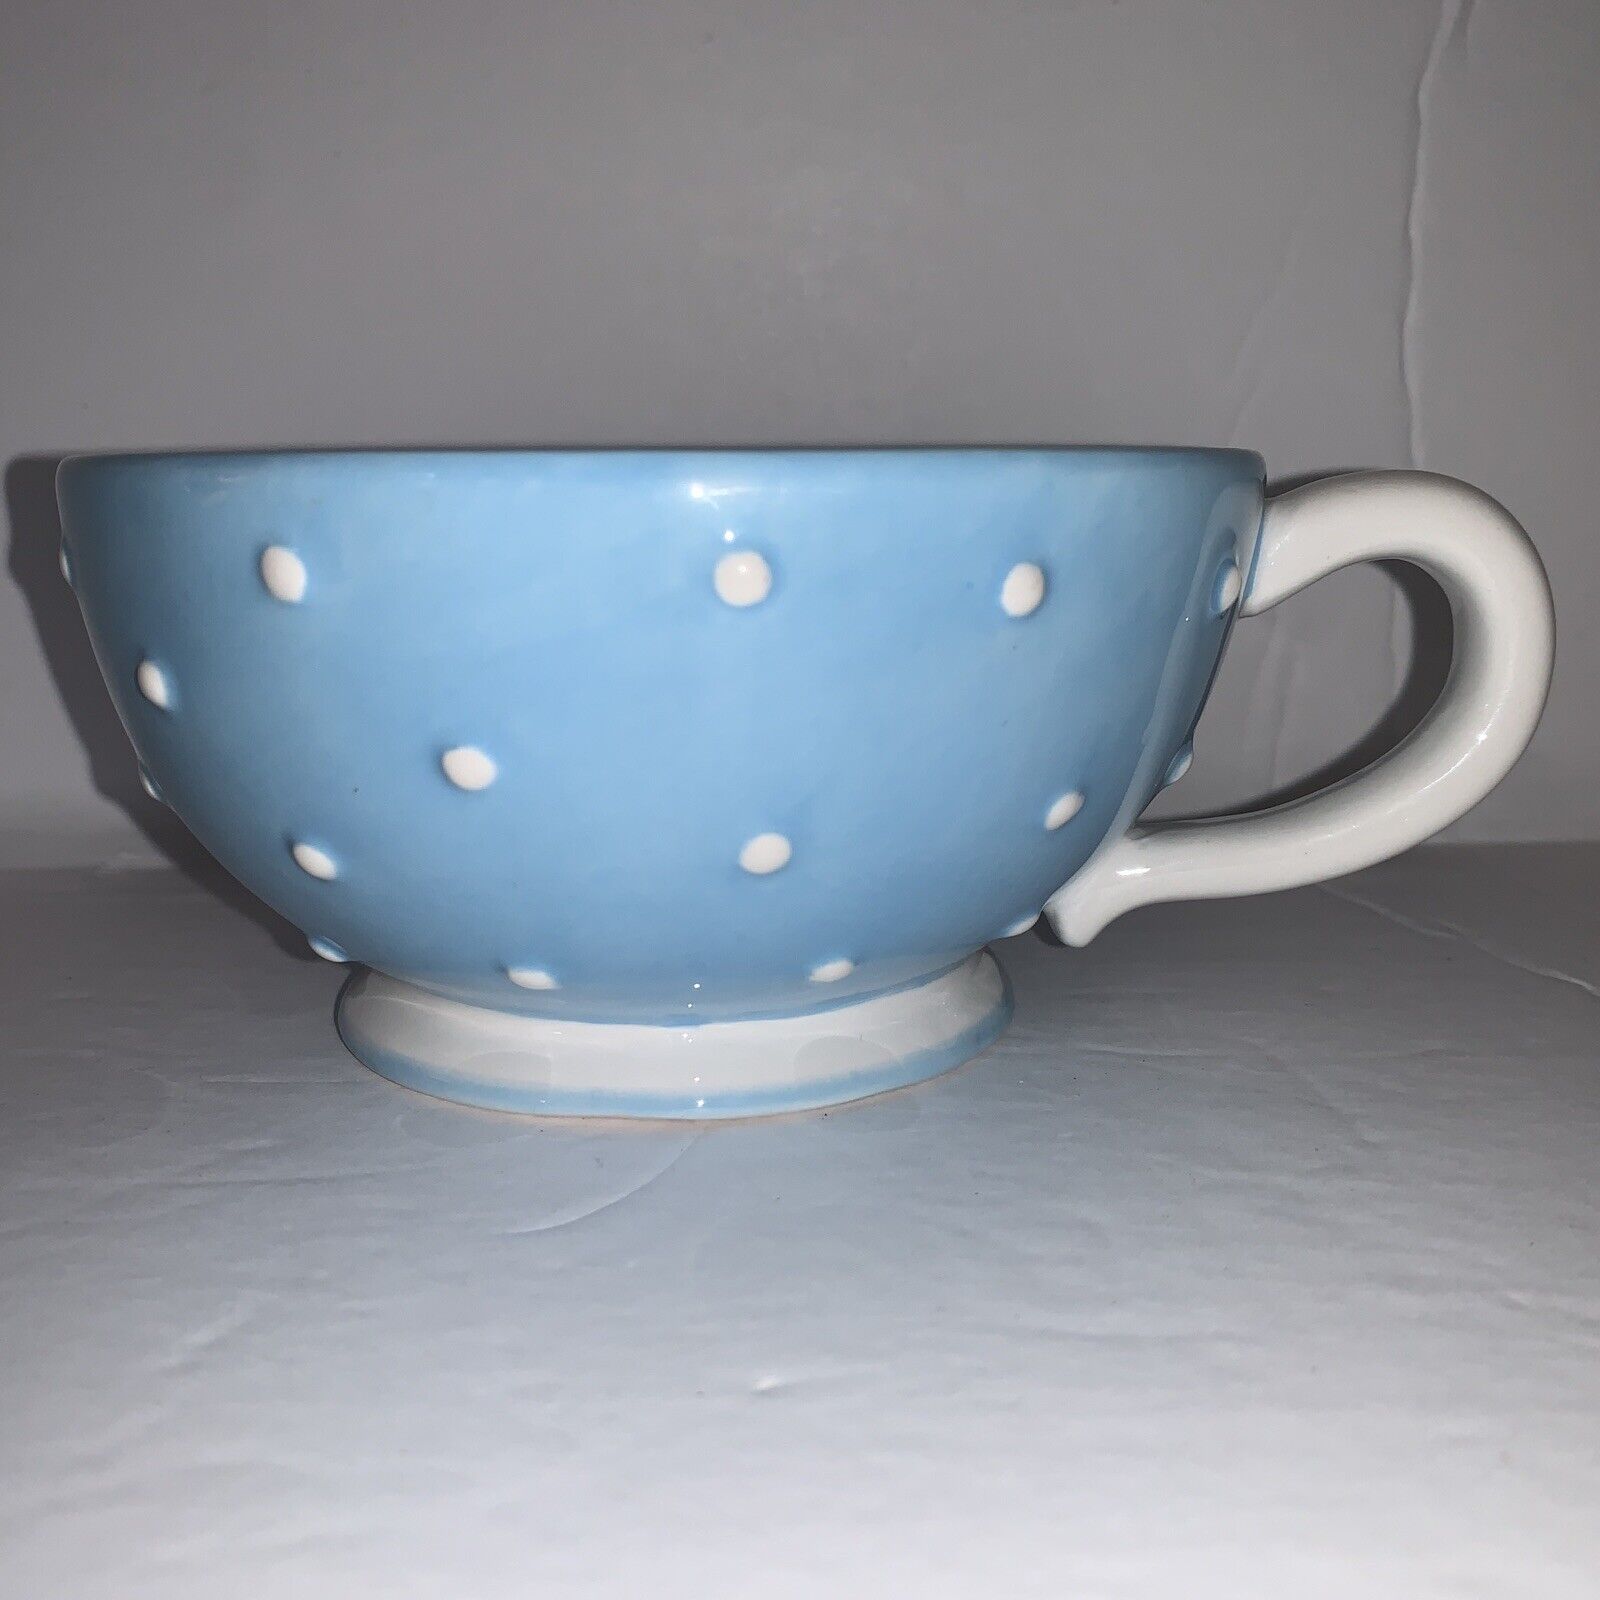 Susan Branch Coffee Mug 2002 Michel & Company Light Blue White Dots “Hi Mom”